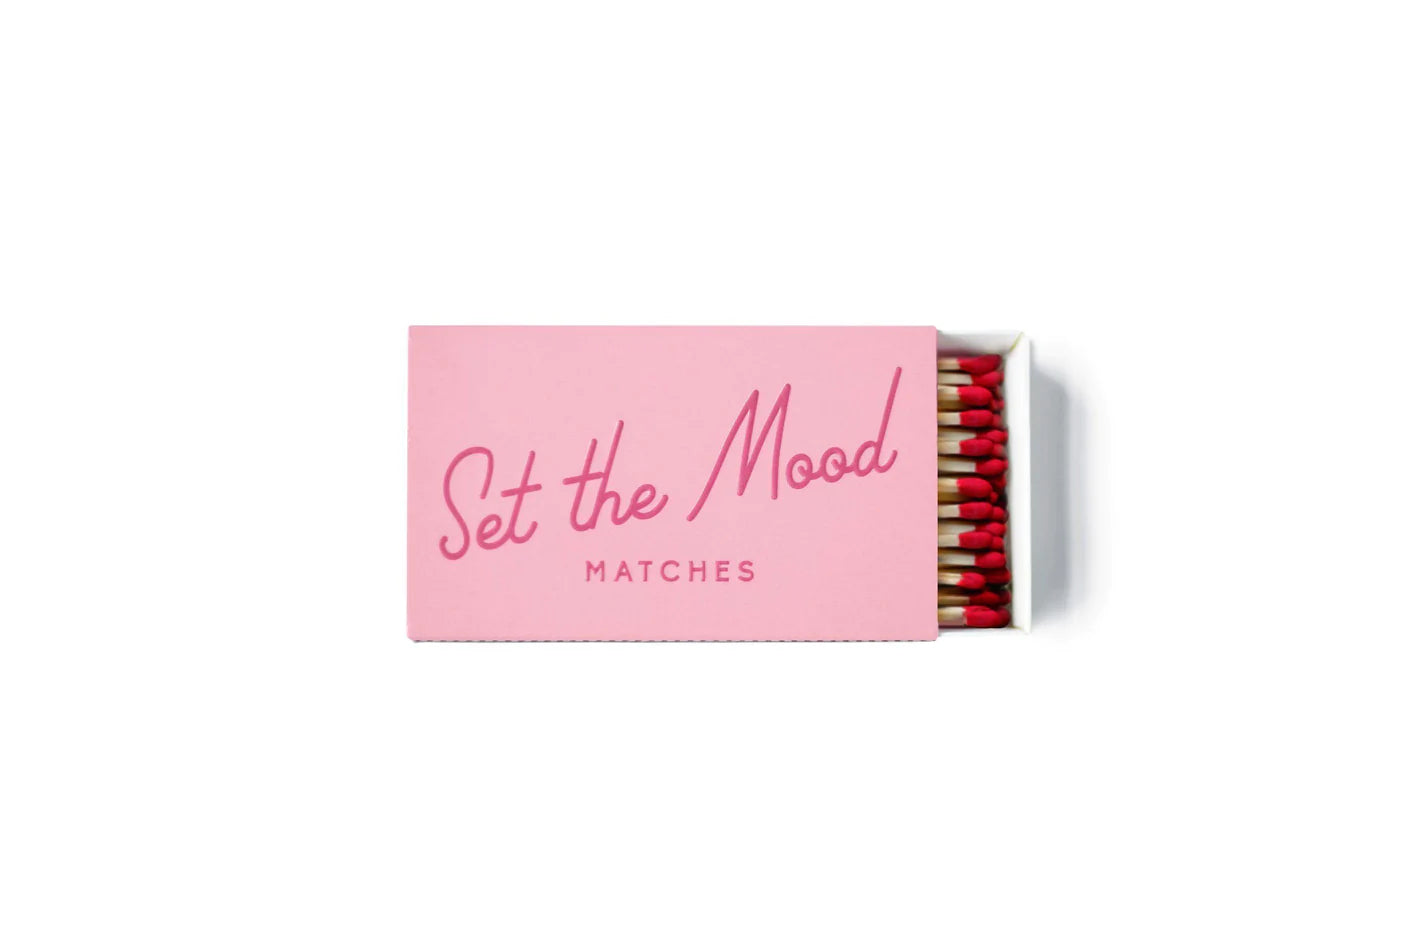 Matches - "Set the Mood"